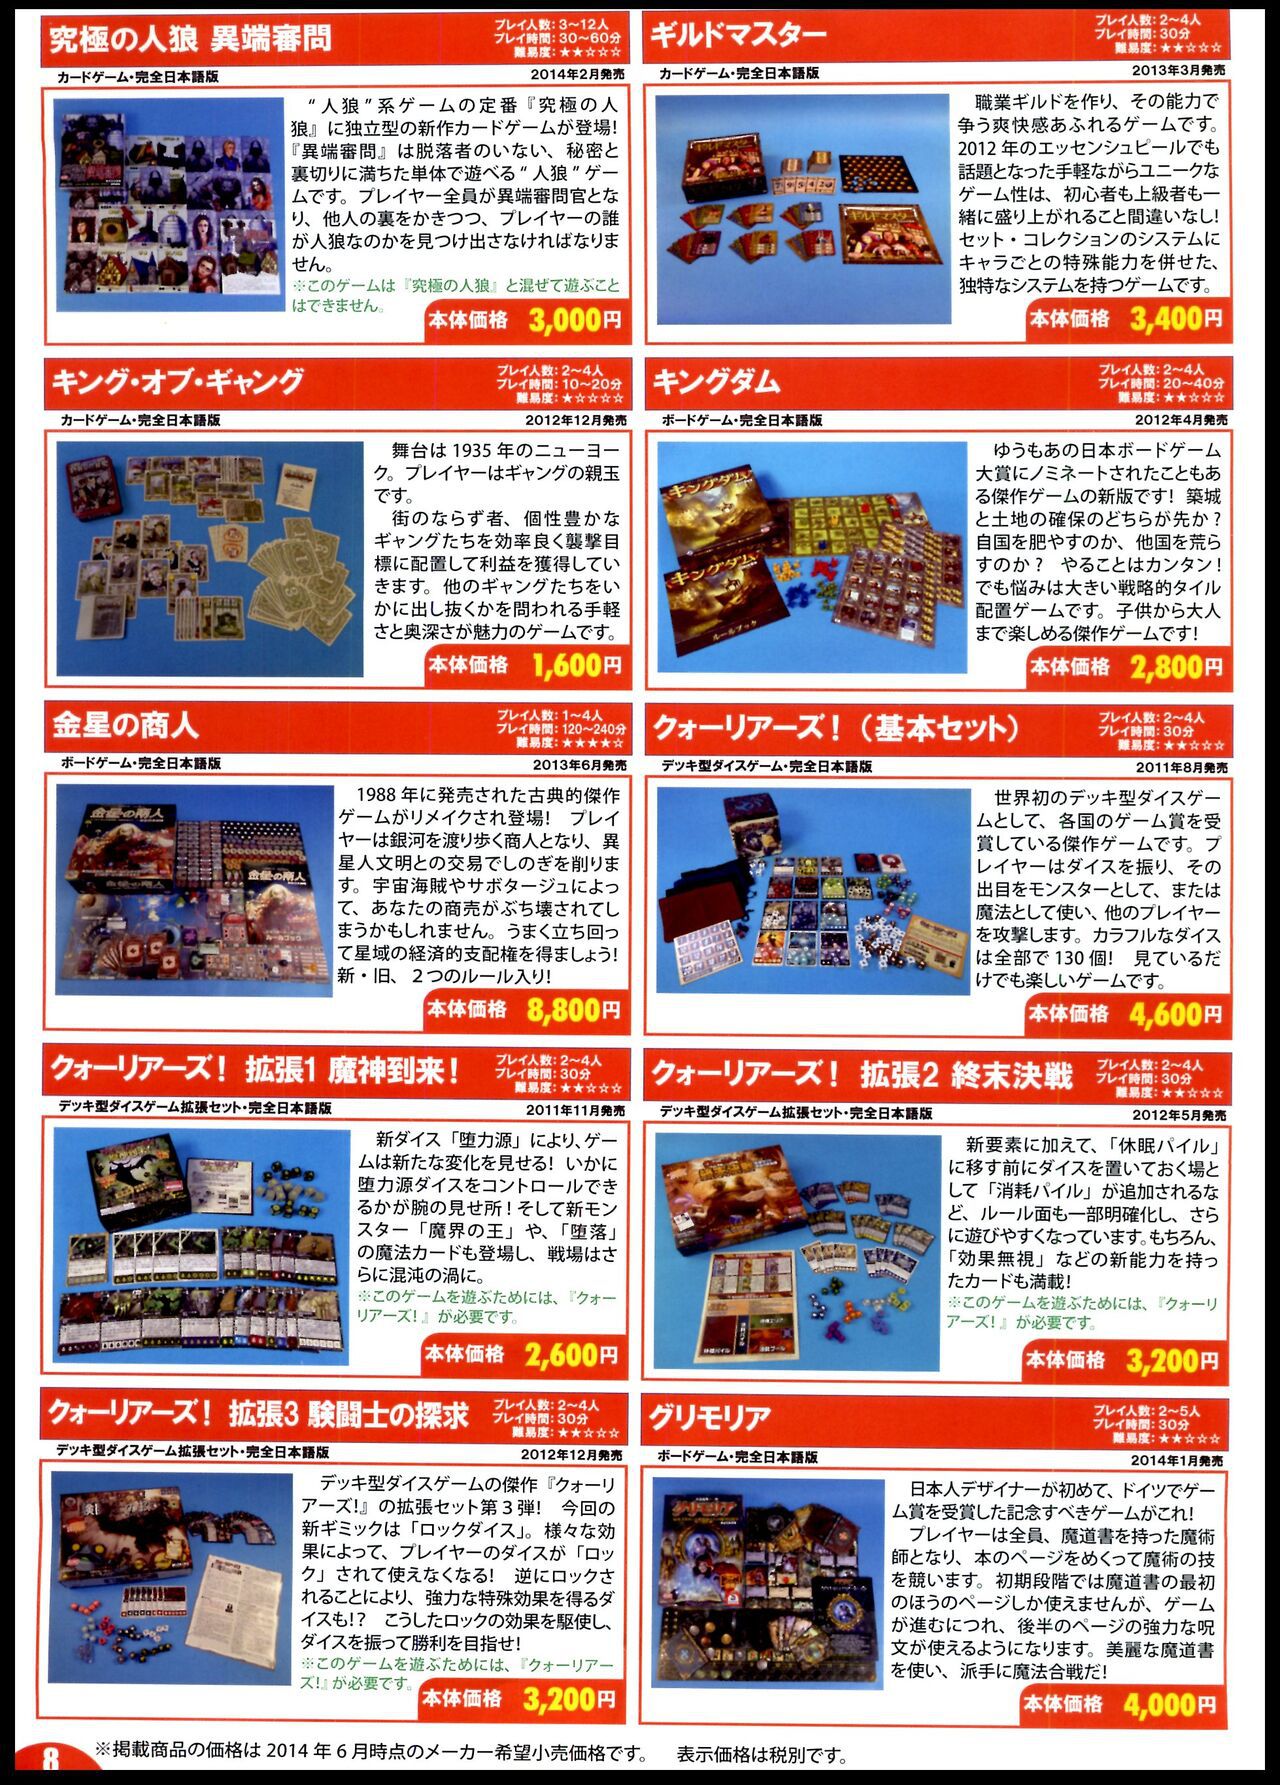 [Arclight Games] Board game catalog 2014 Summer - Autumn [アークライト] ボードゲームカタログ 2014 夏-秋 8